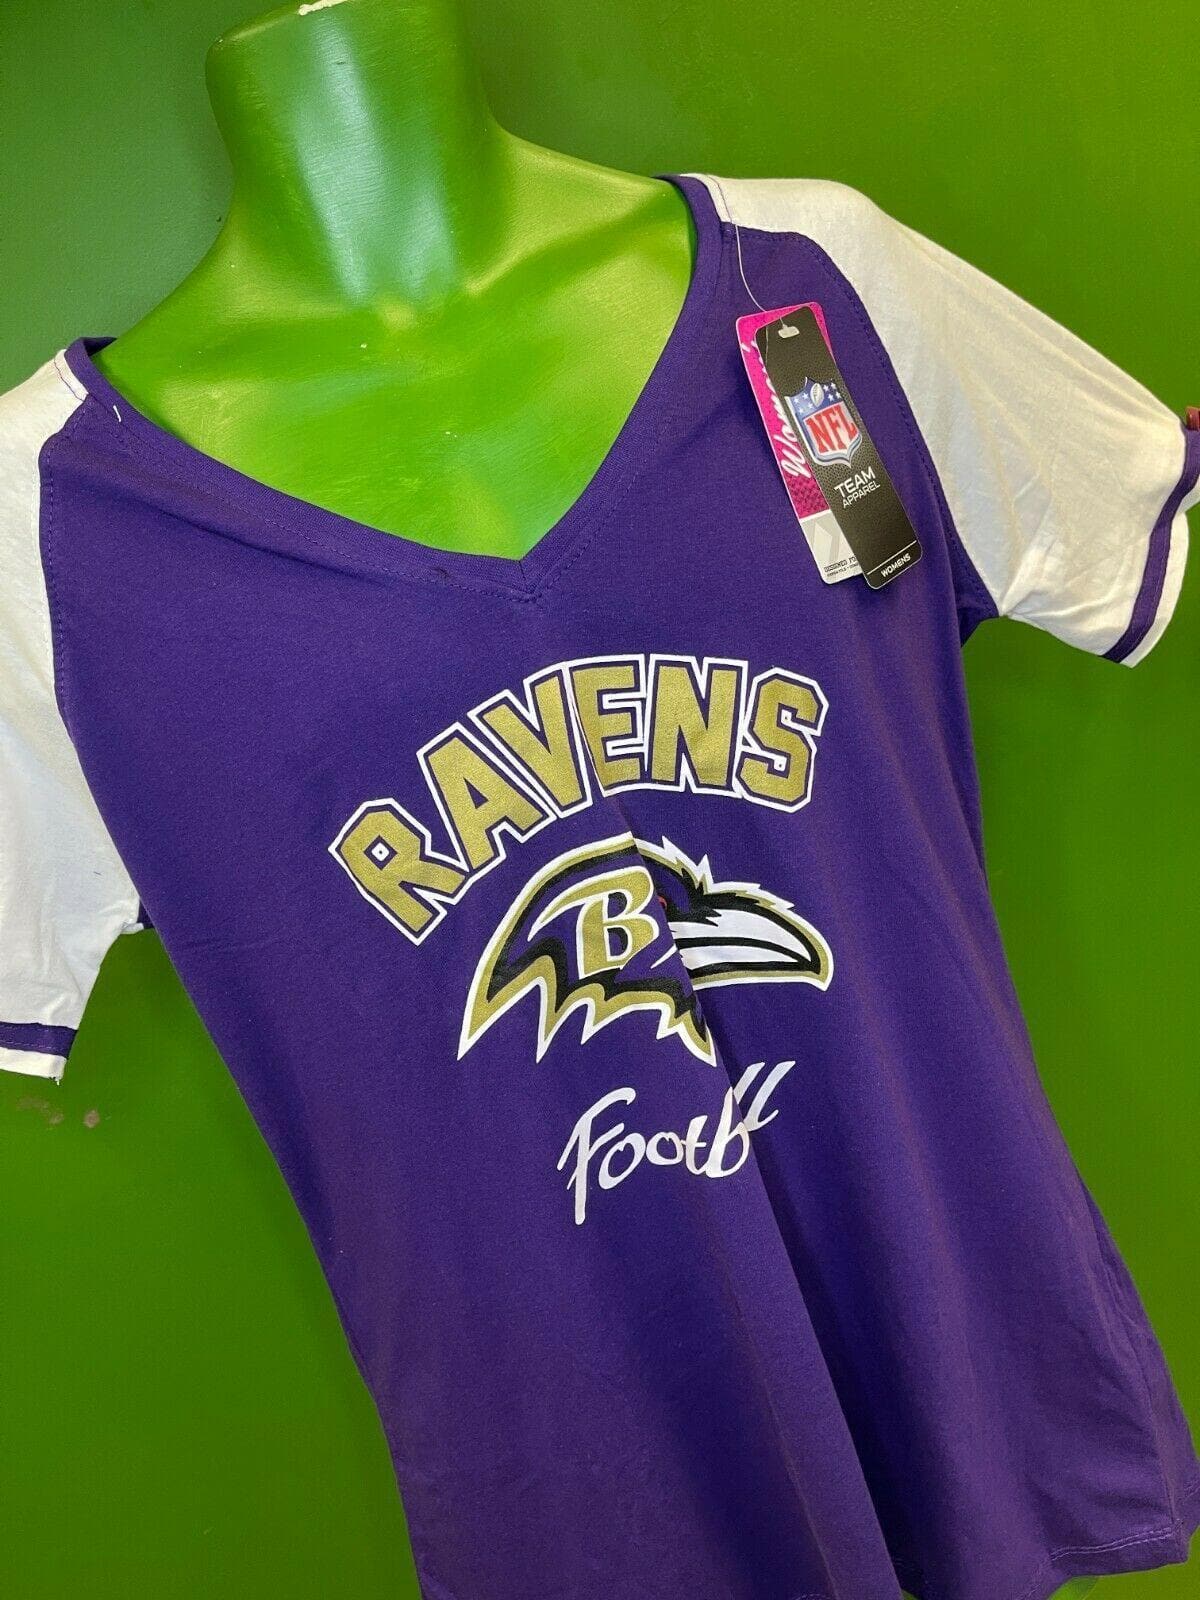 NFL Baltimore Ravens Majestic Women's Plus Size V-Neck T-Shirt XL NWT